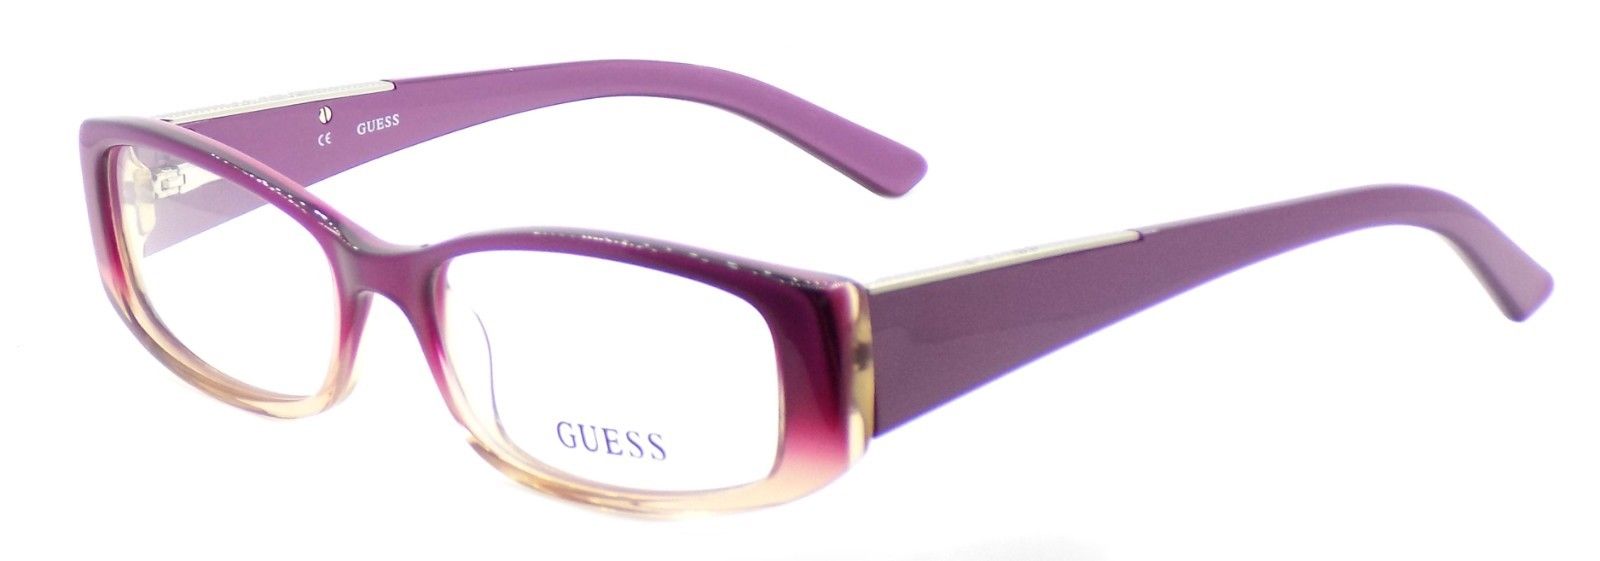 1-GUESS GU2385 PUR Women's Plastic Eyeglasses Frames 52-16-135 Purple + CASE-715583766235-IKSpecs